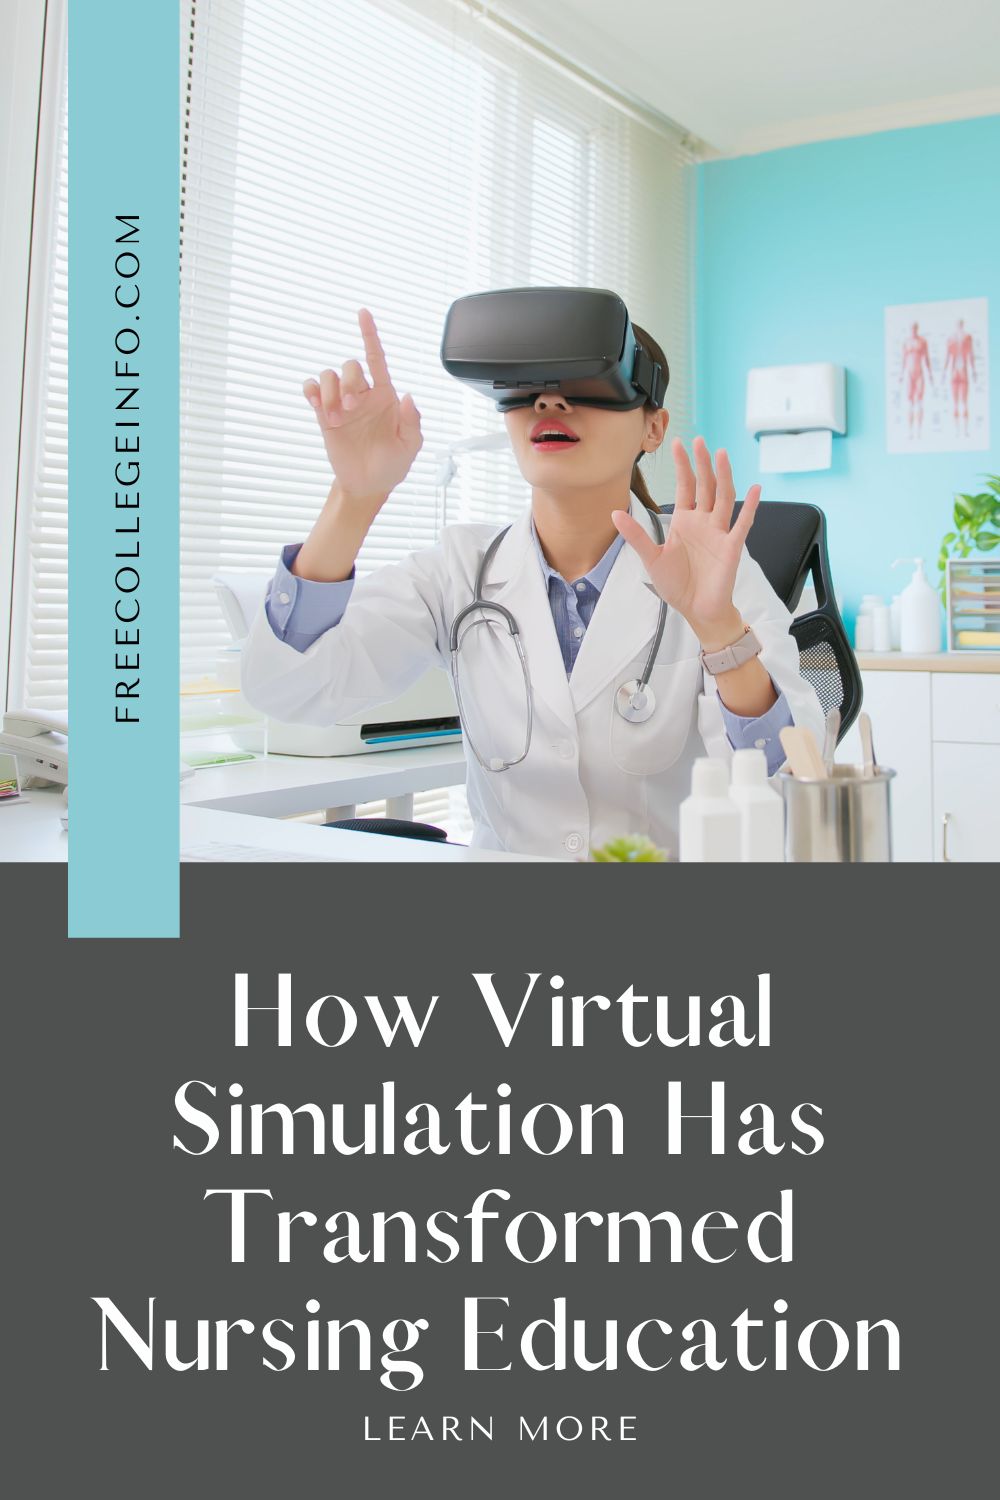 Virtual Simulation Has Transformed Nursing Education